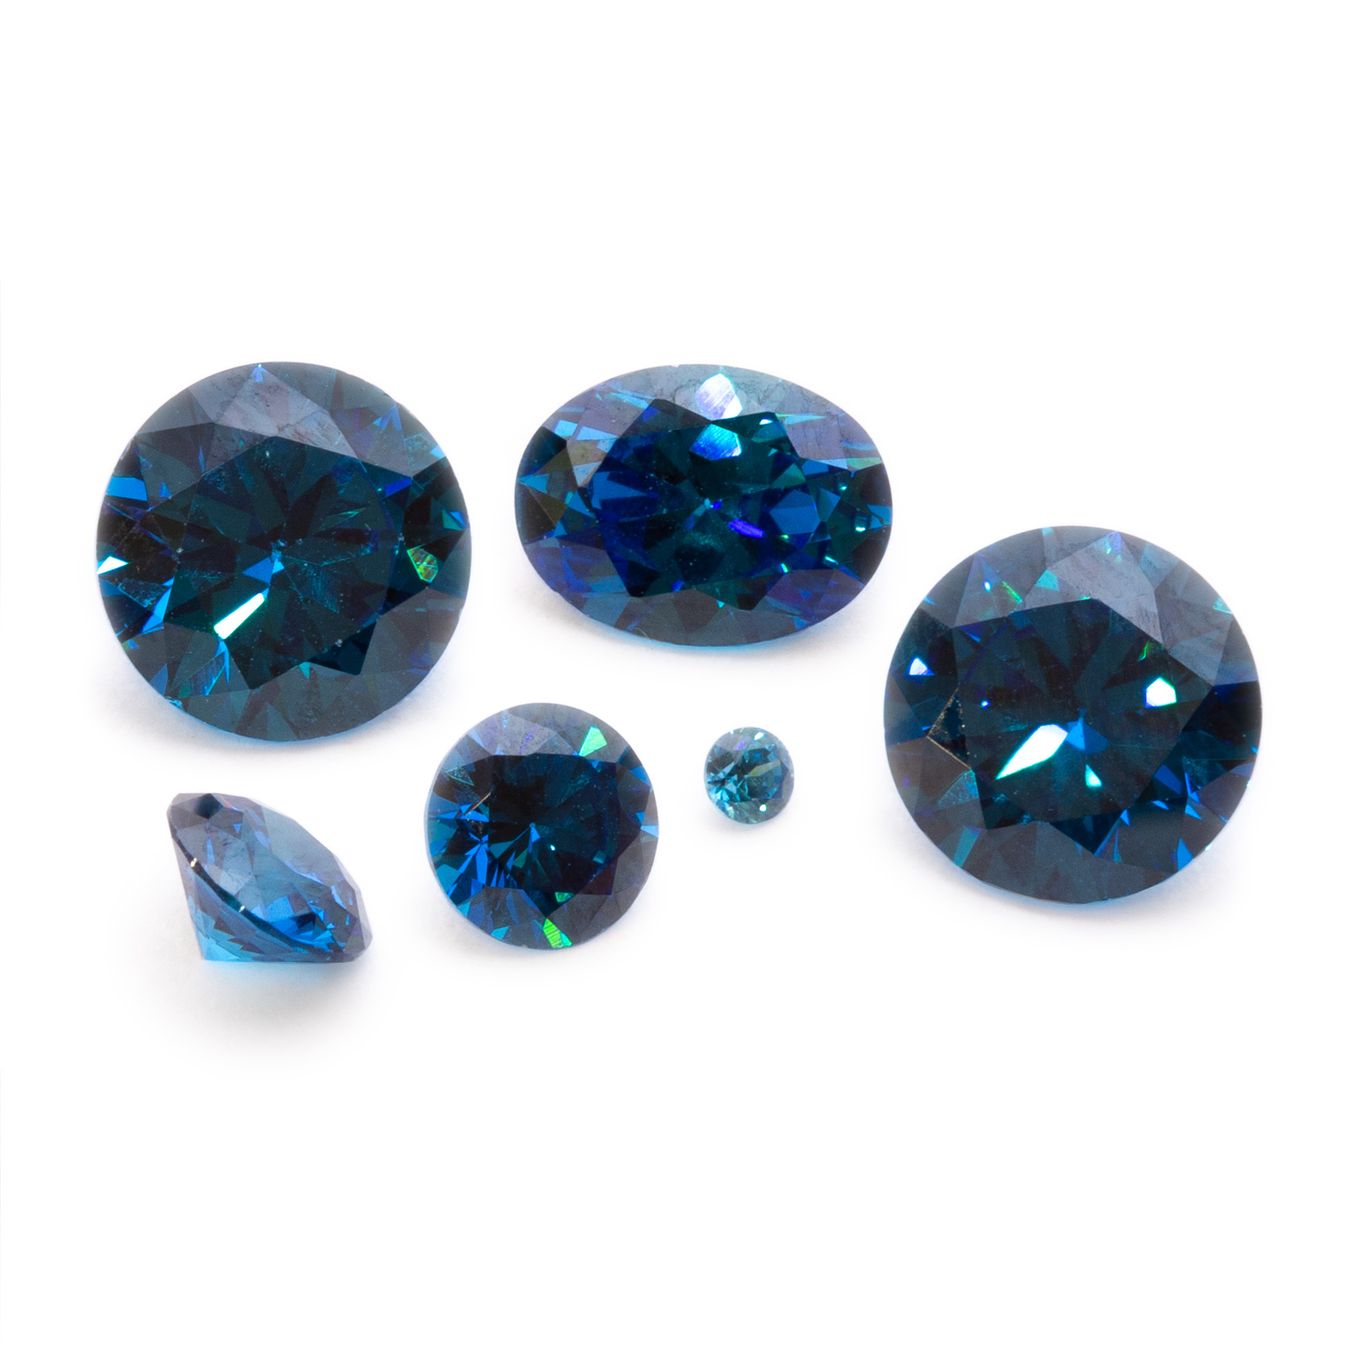 Sapphire Coloured Cubic Zirconia Faceted Stones